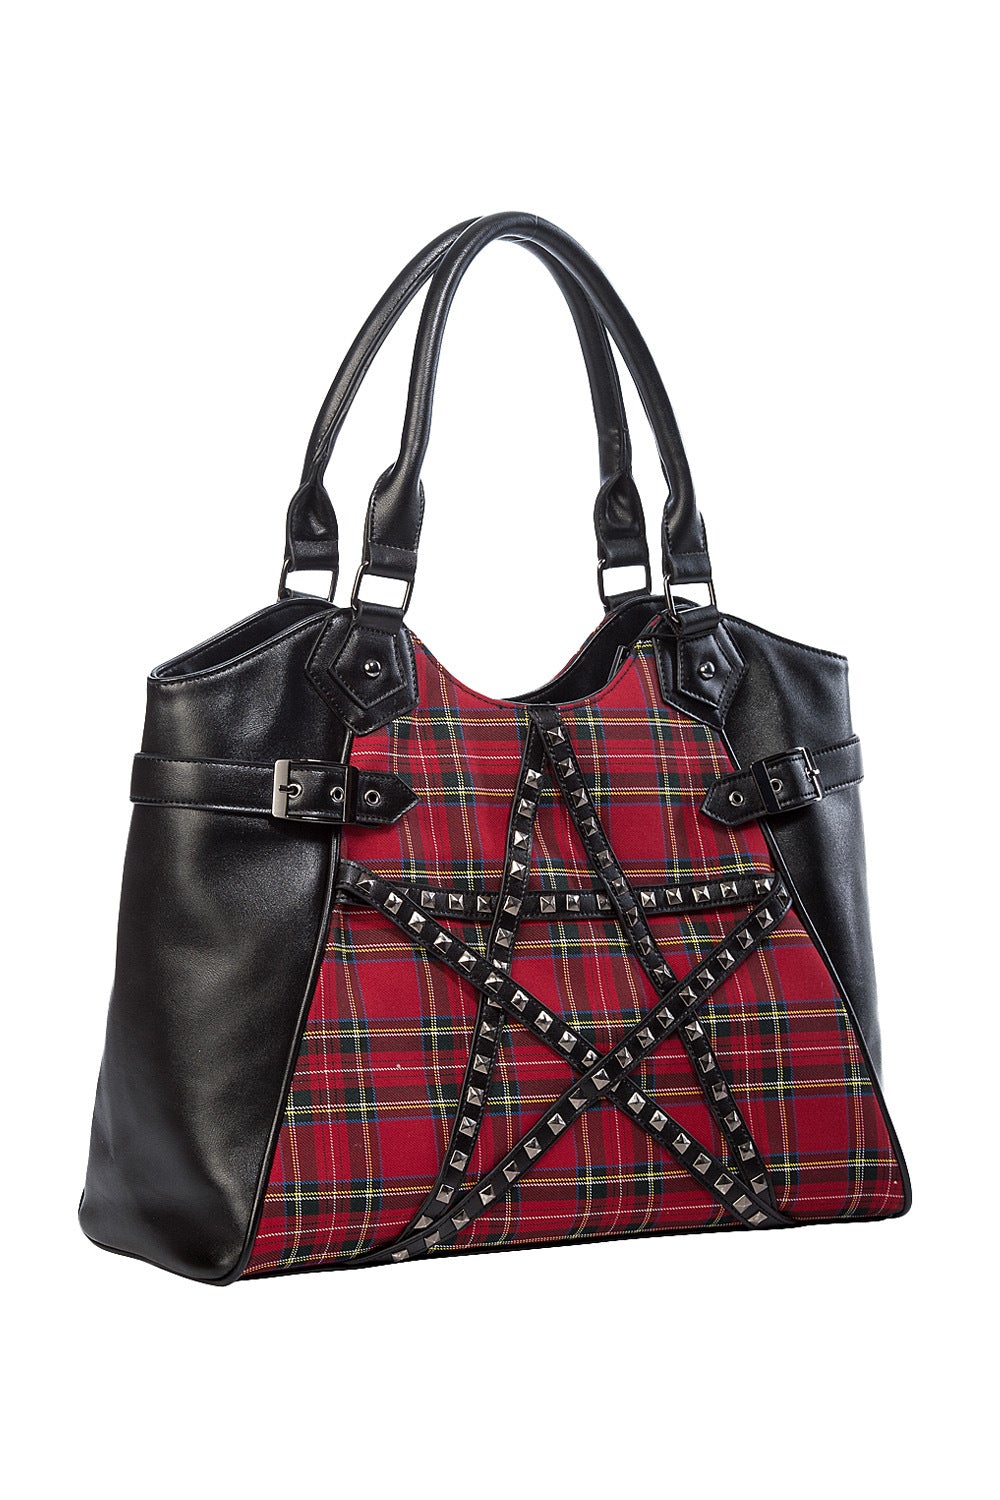 Red tartan handbag with studded pentagram feature.